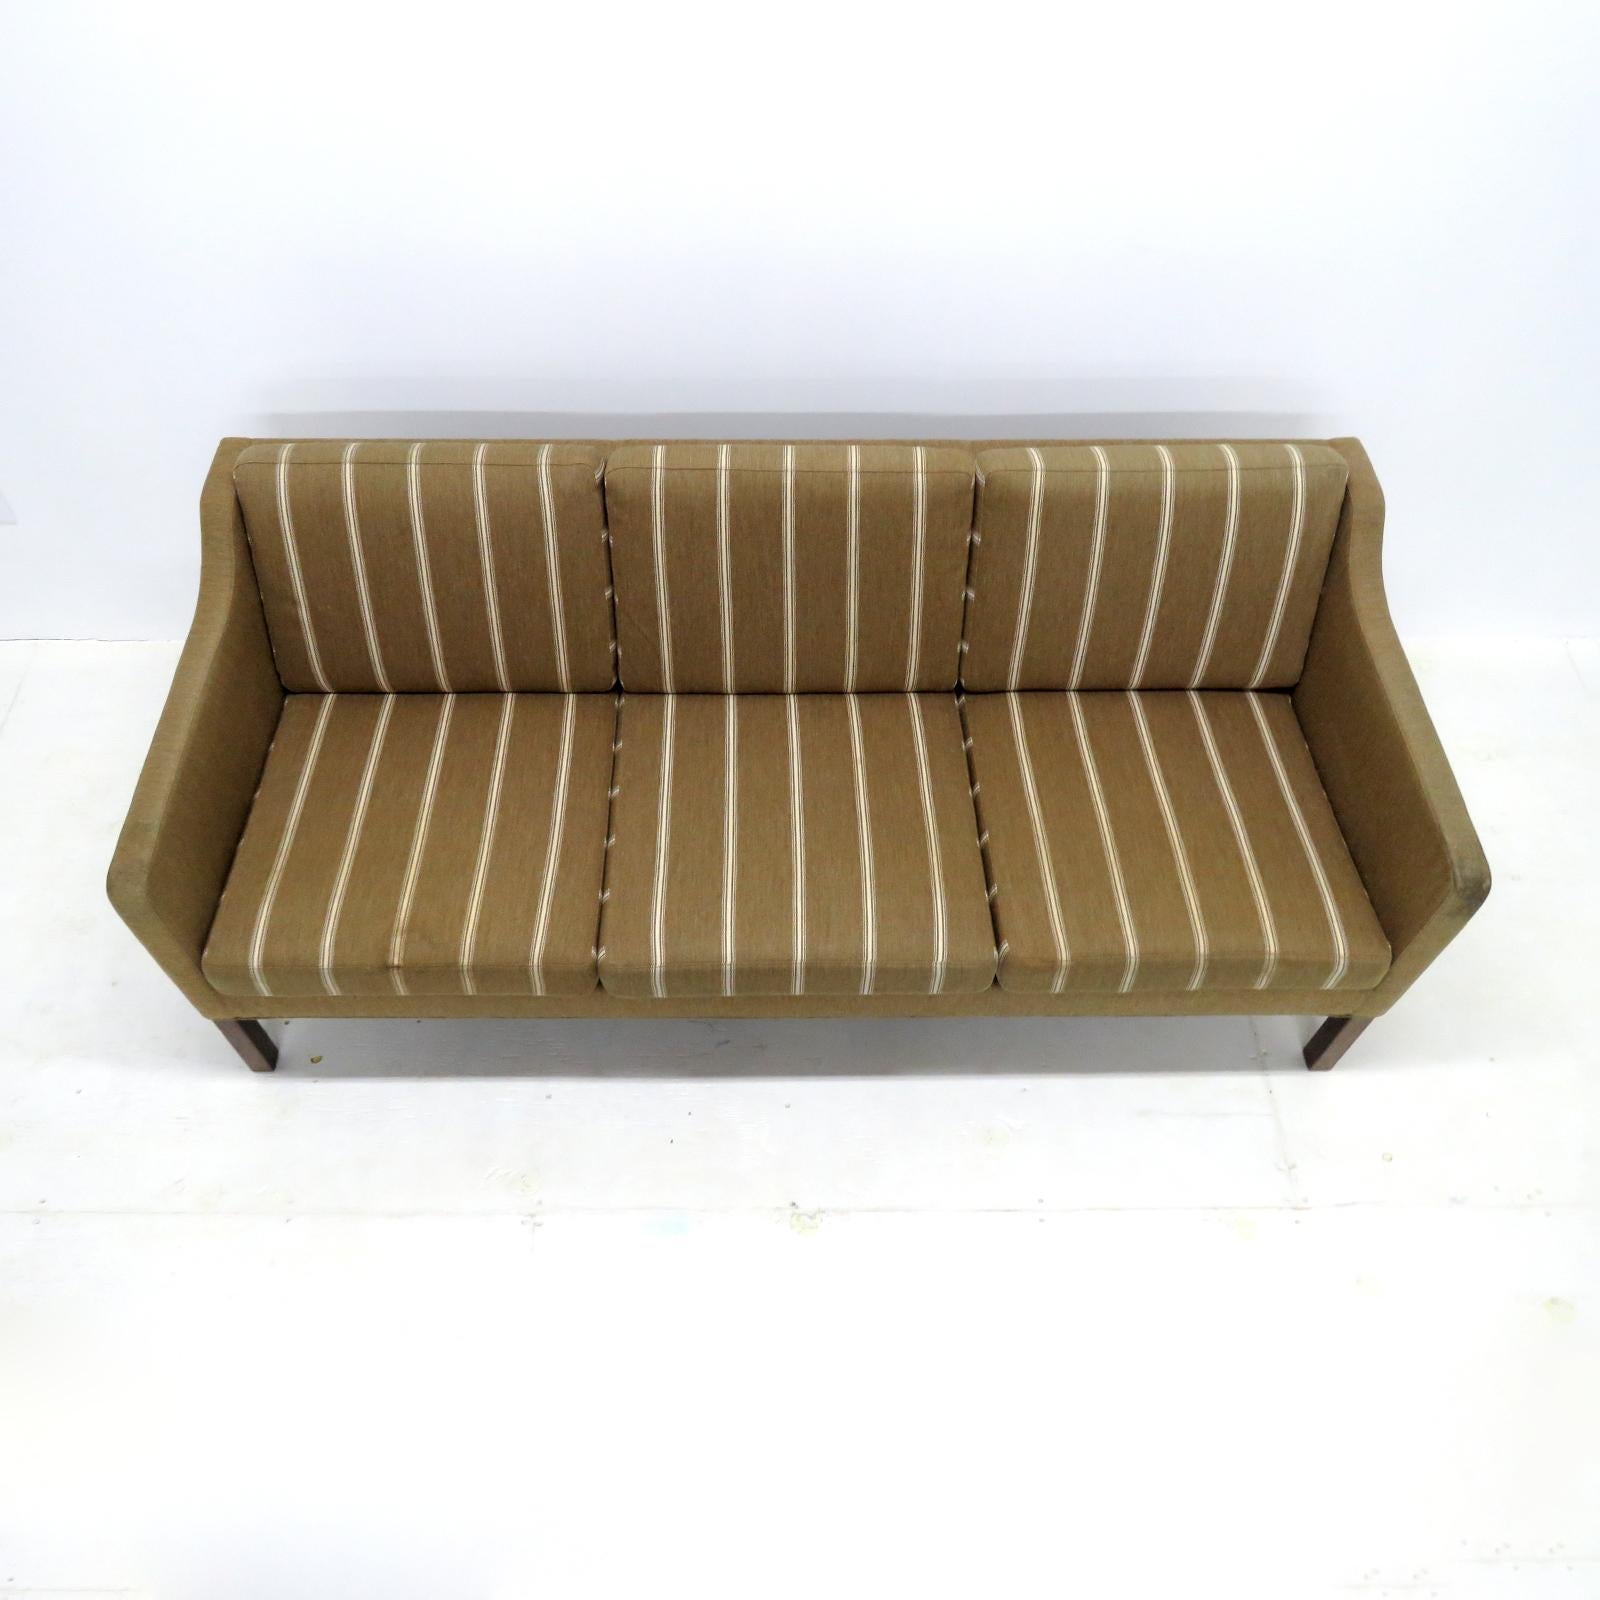 Børge Mogensen Modell #2223 Dreisitziges Sofa, 1960 (Skandinavische Moderne)